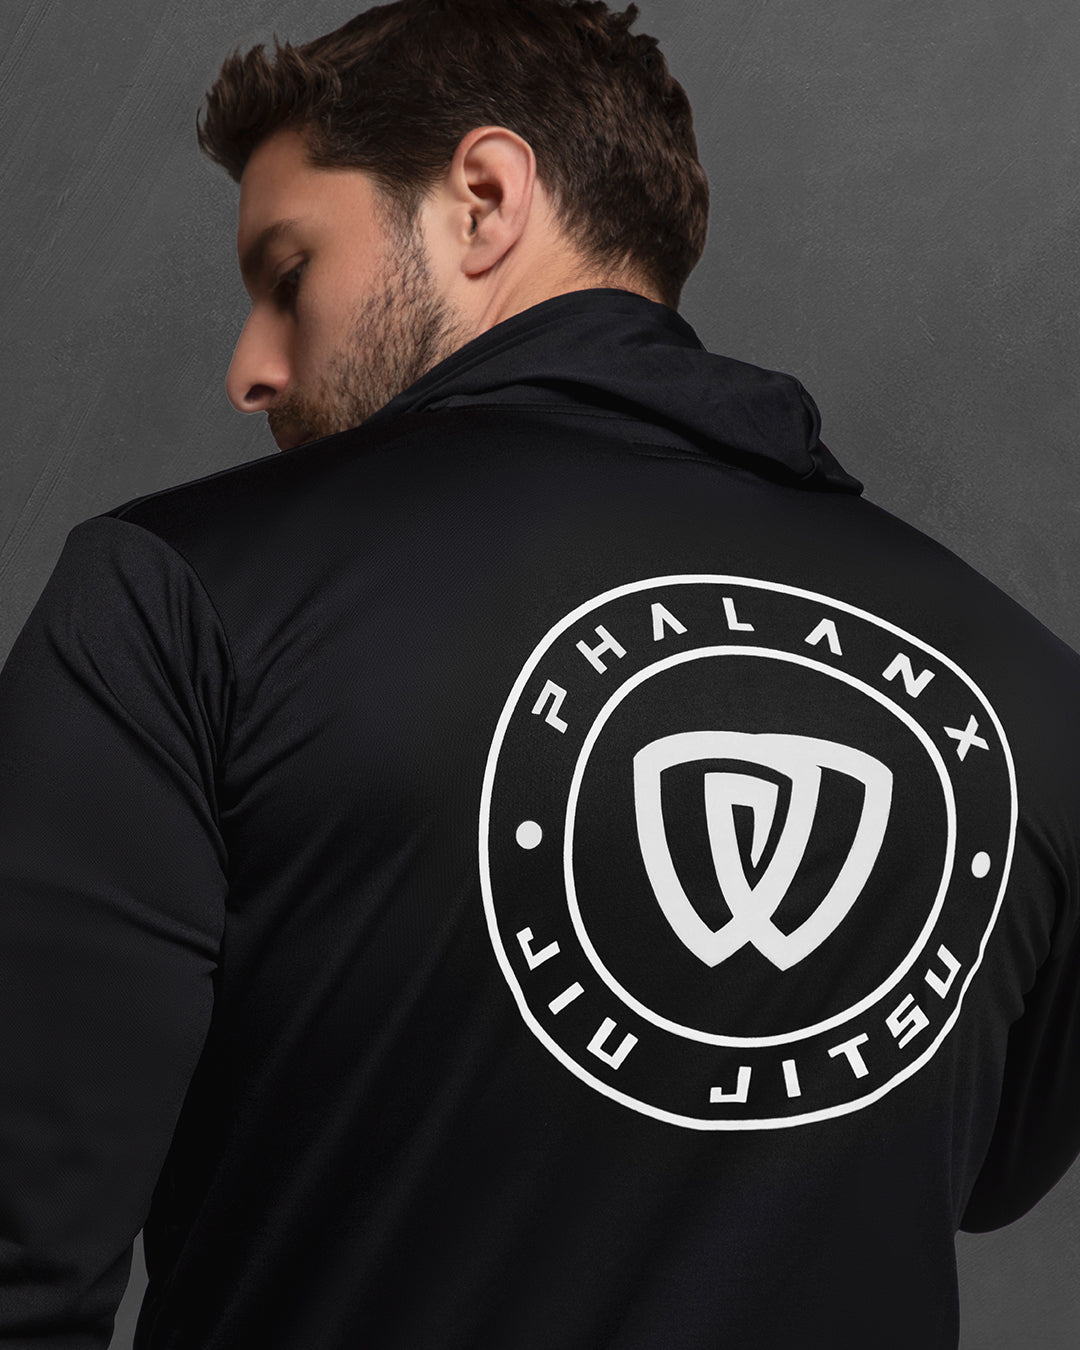 Phalanx Jiu Jitsu hoodies. Perfect for MMA  or BJJ off the mat. High level Brazilian Jiu-jitsu athletic apparel, the best brand in JJ